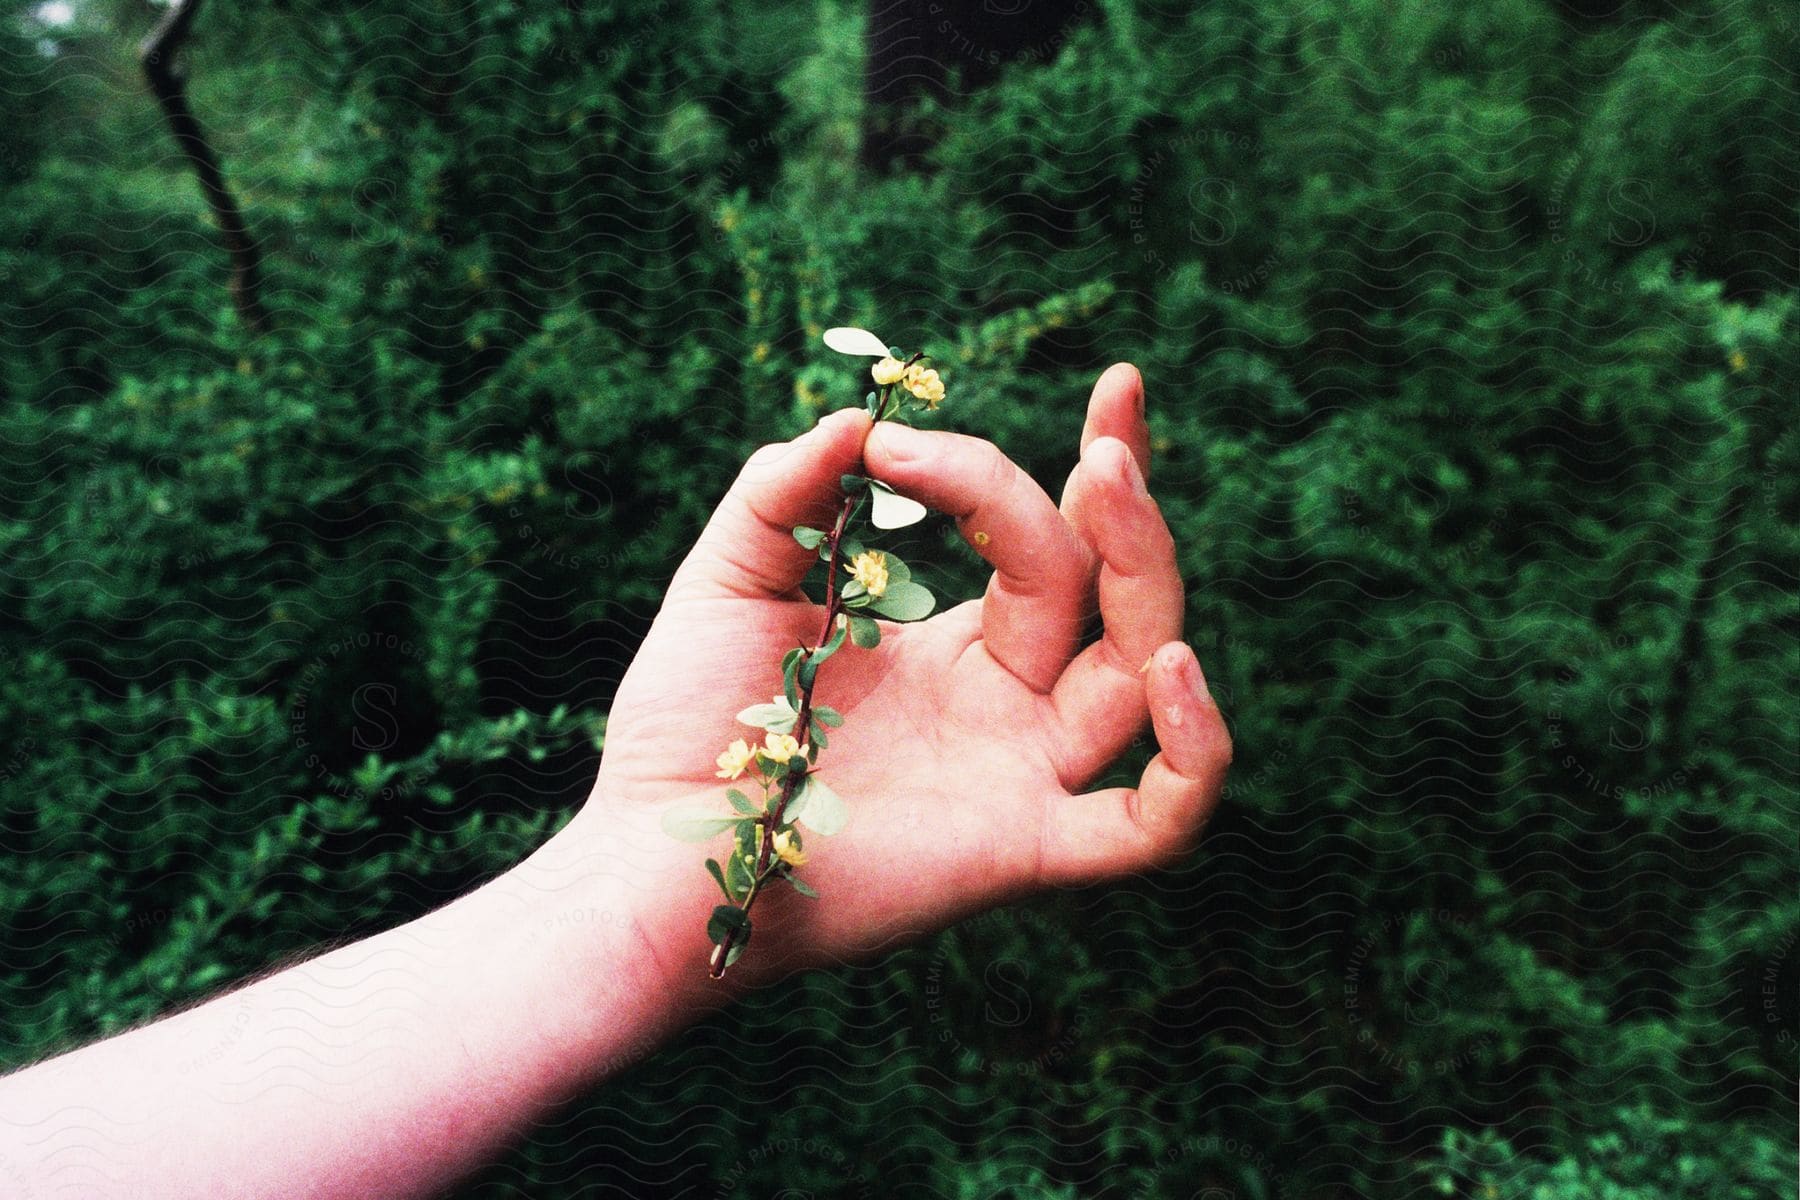 Hand holding flowering shrub branch